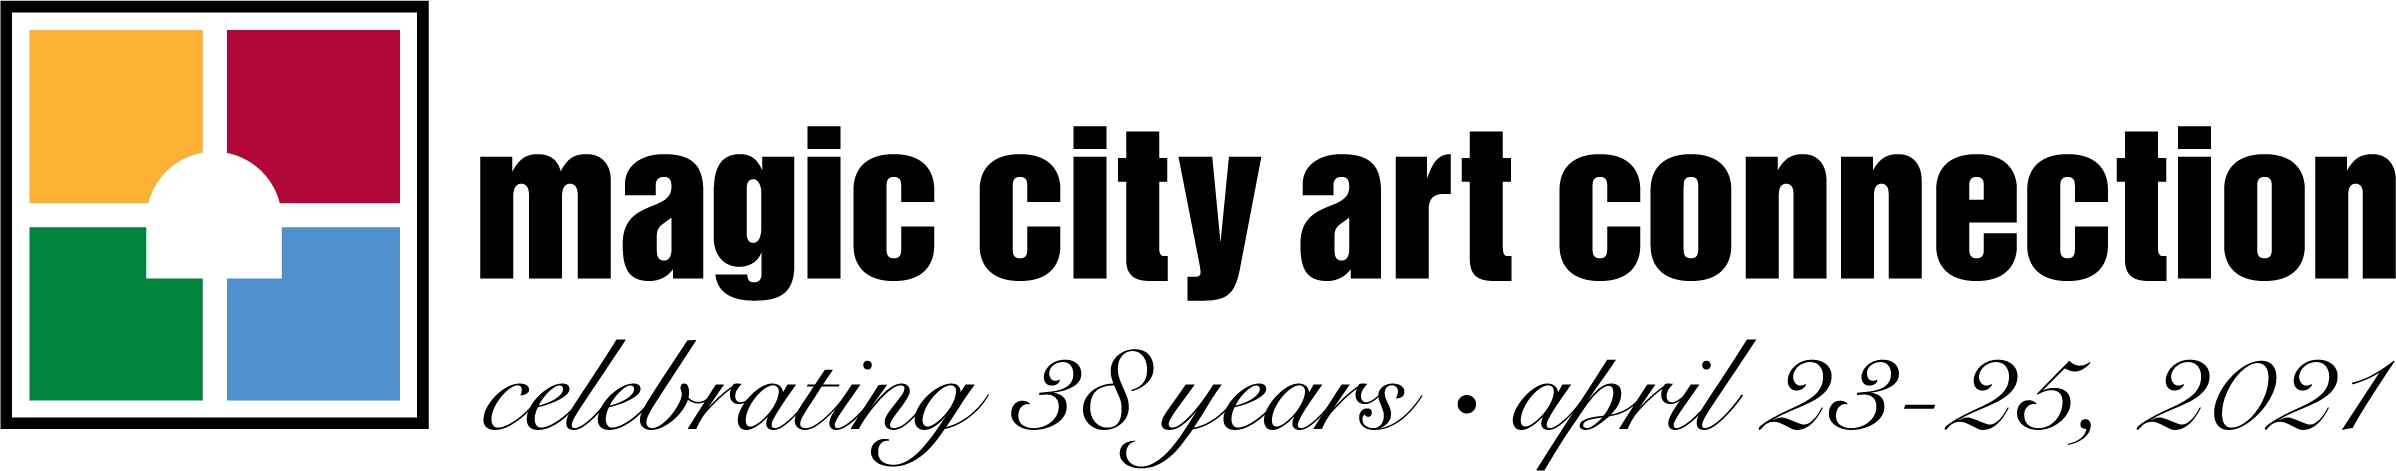 38th Magic City Art Connection